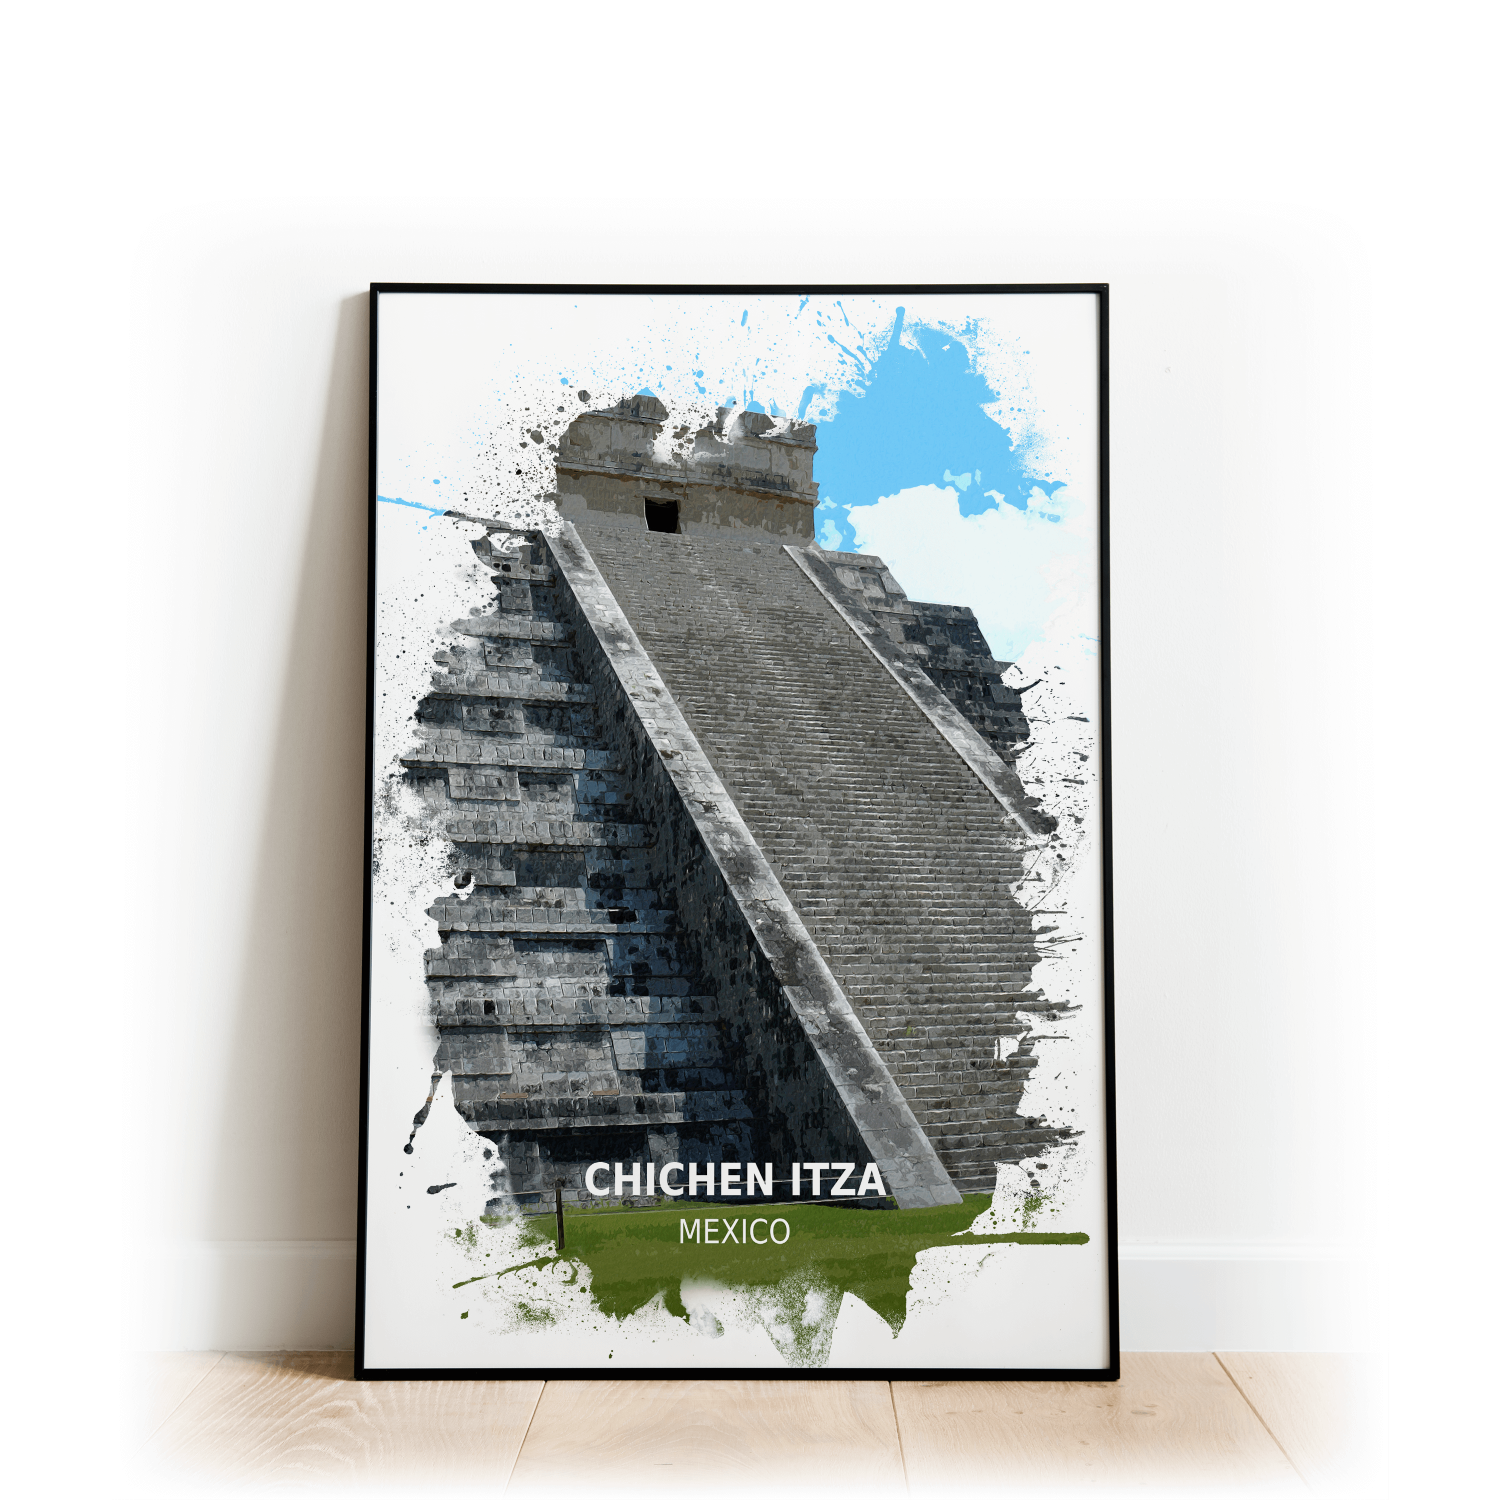 Chichen Itza - Mexico - Print - A4 - Standard - Print Only